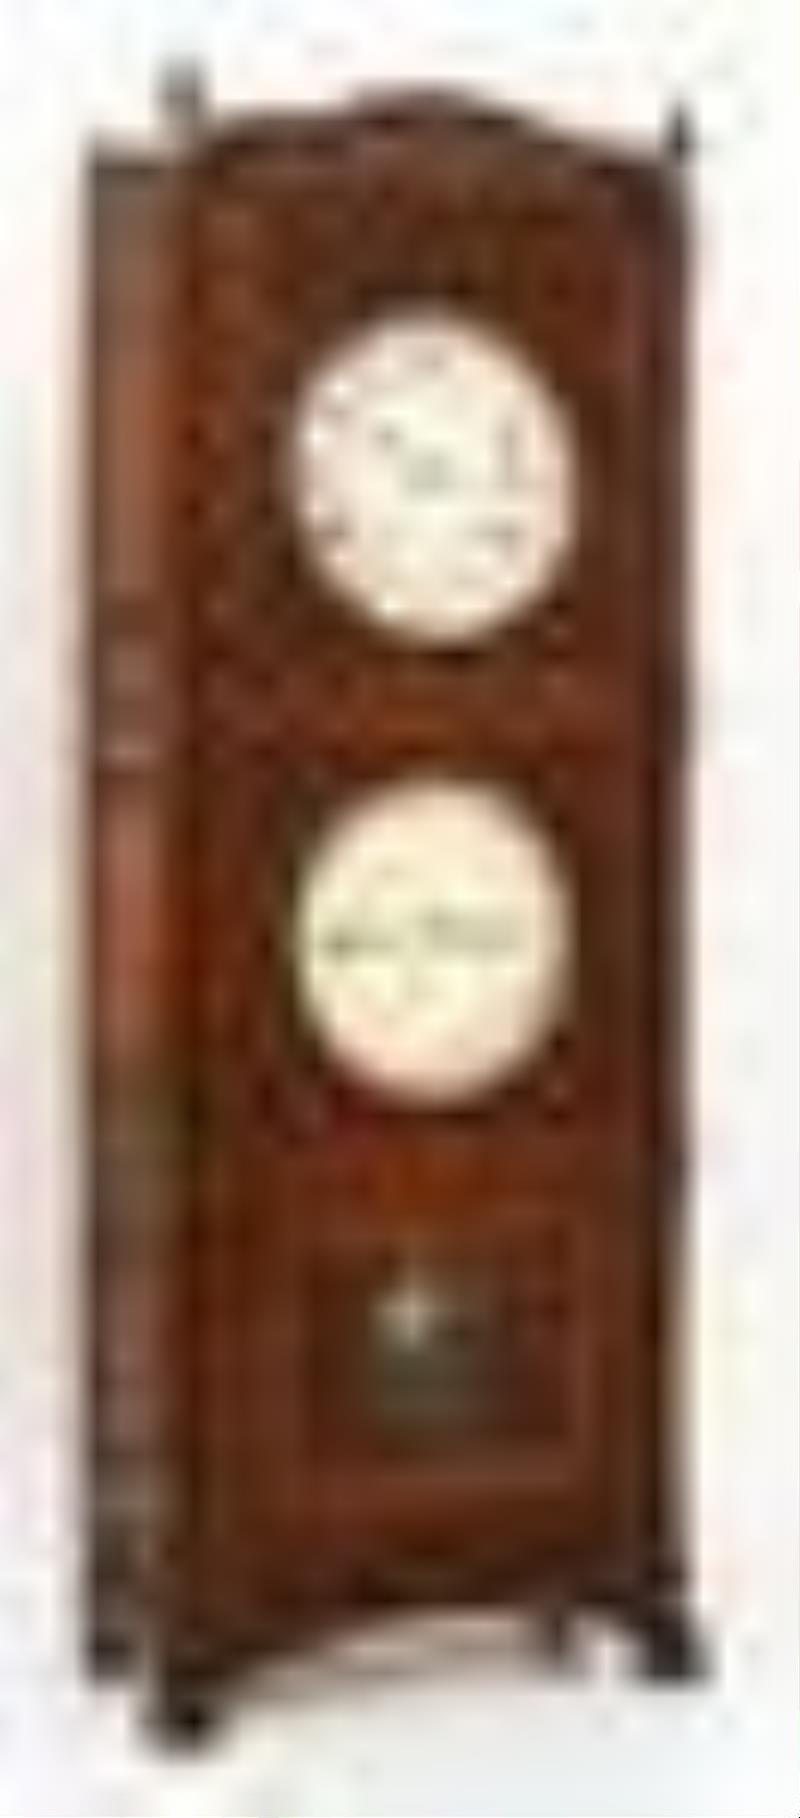 Ithaca Calendar Clock Co. "Cornell Model" Floor Clock